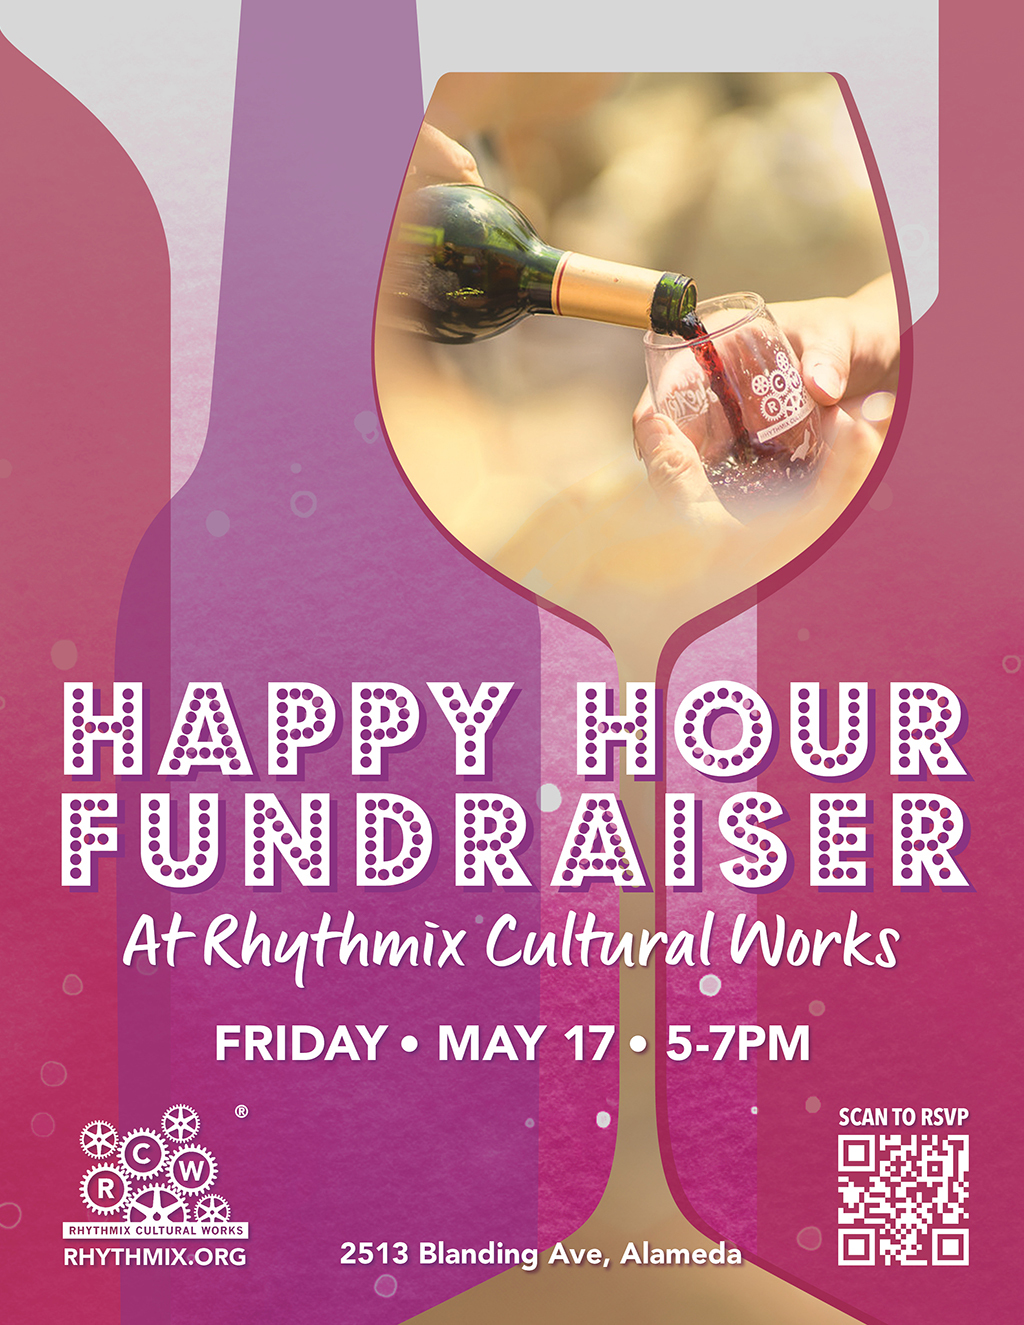 Rhythmix Cultural Works Join us for an Evening of Art and Music at Rhythmix Cultural Works  promotion flier on Digifli com